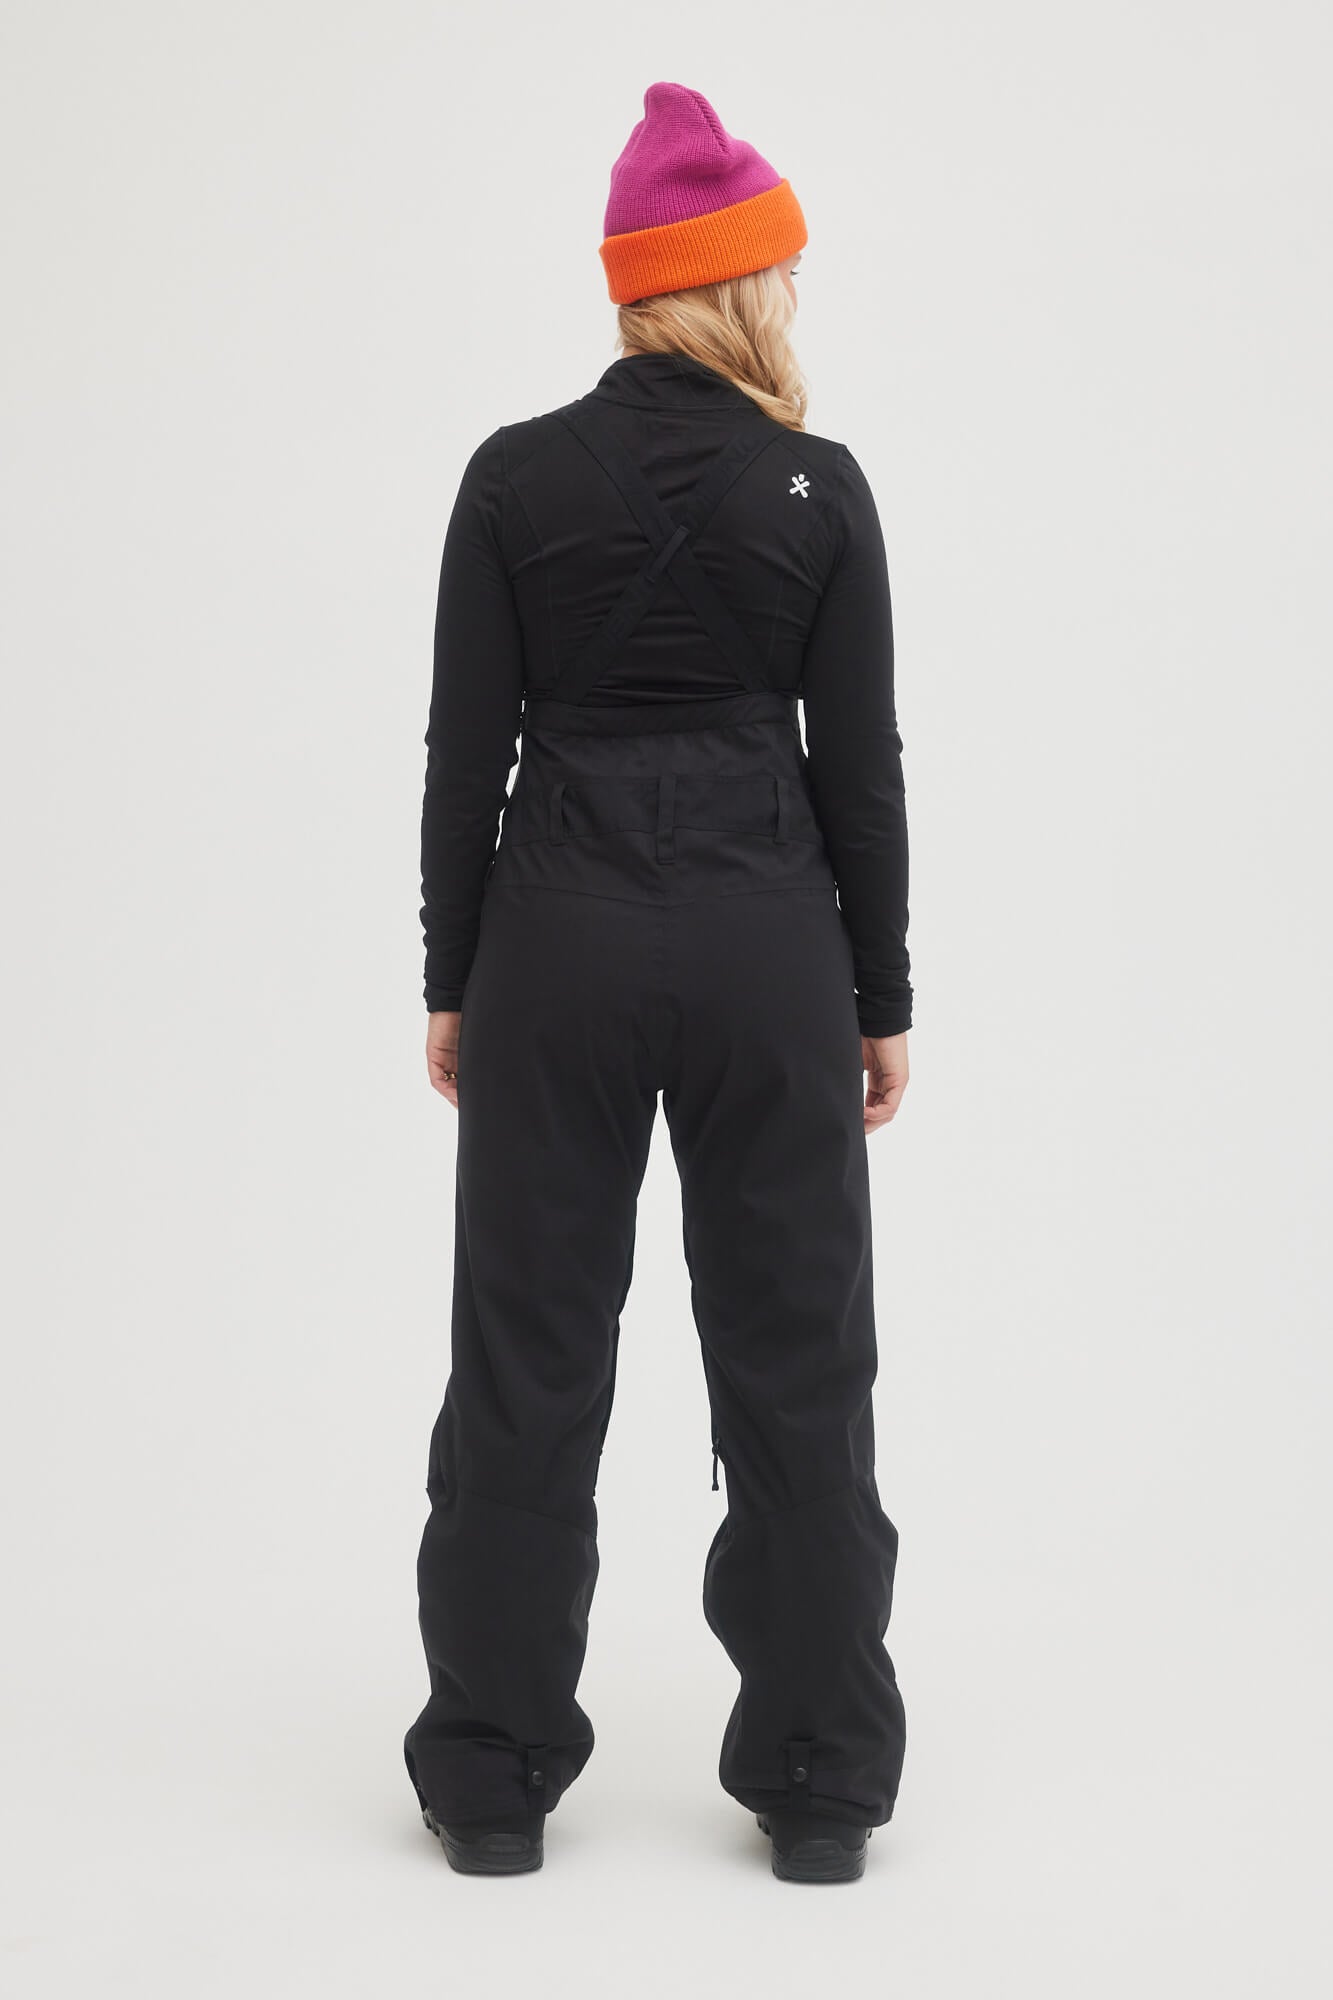 Women's O'Riginals Bib Snow Pants - Black Out Colour Block